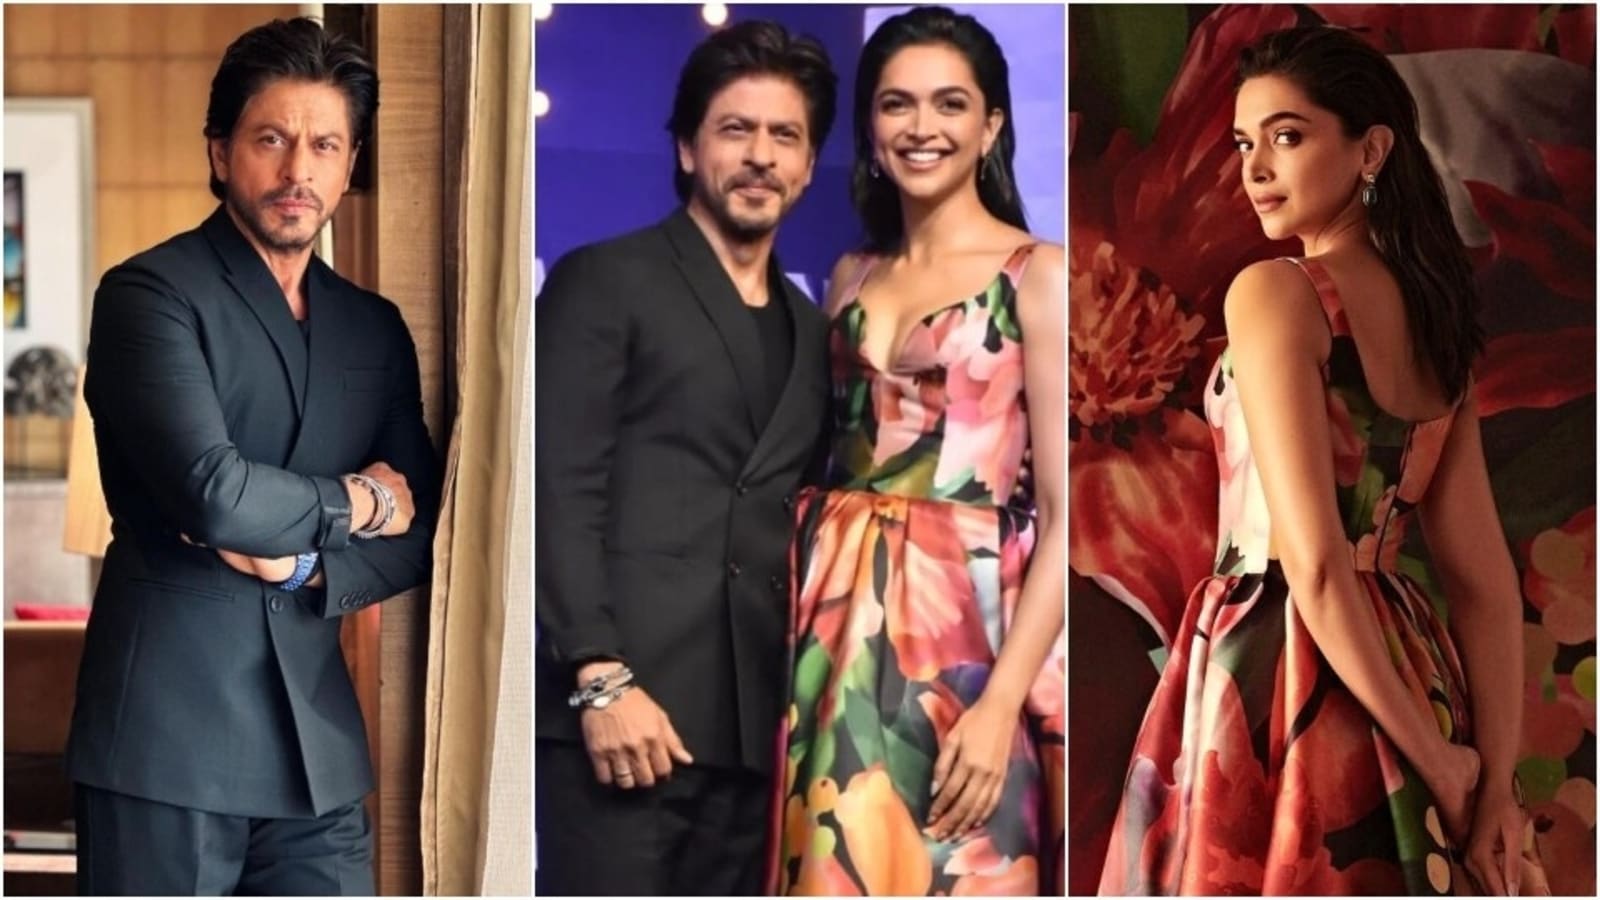 Shah Rukh Khan’s dapper look in black suit, Deepika Padukone’s floral dress wins heart. Fans call them ‘Dimple gang’